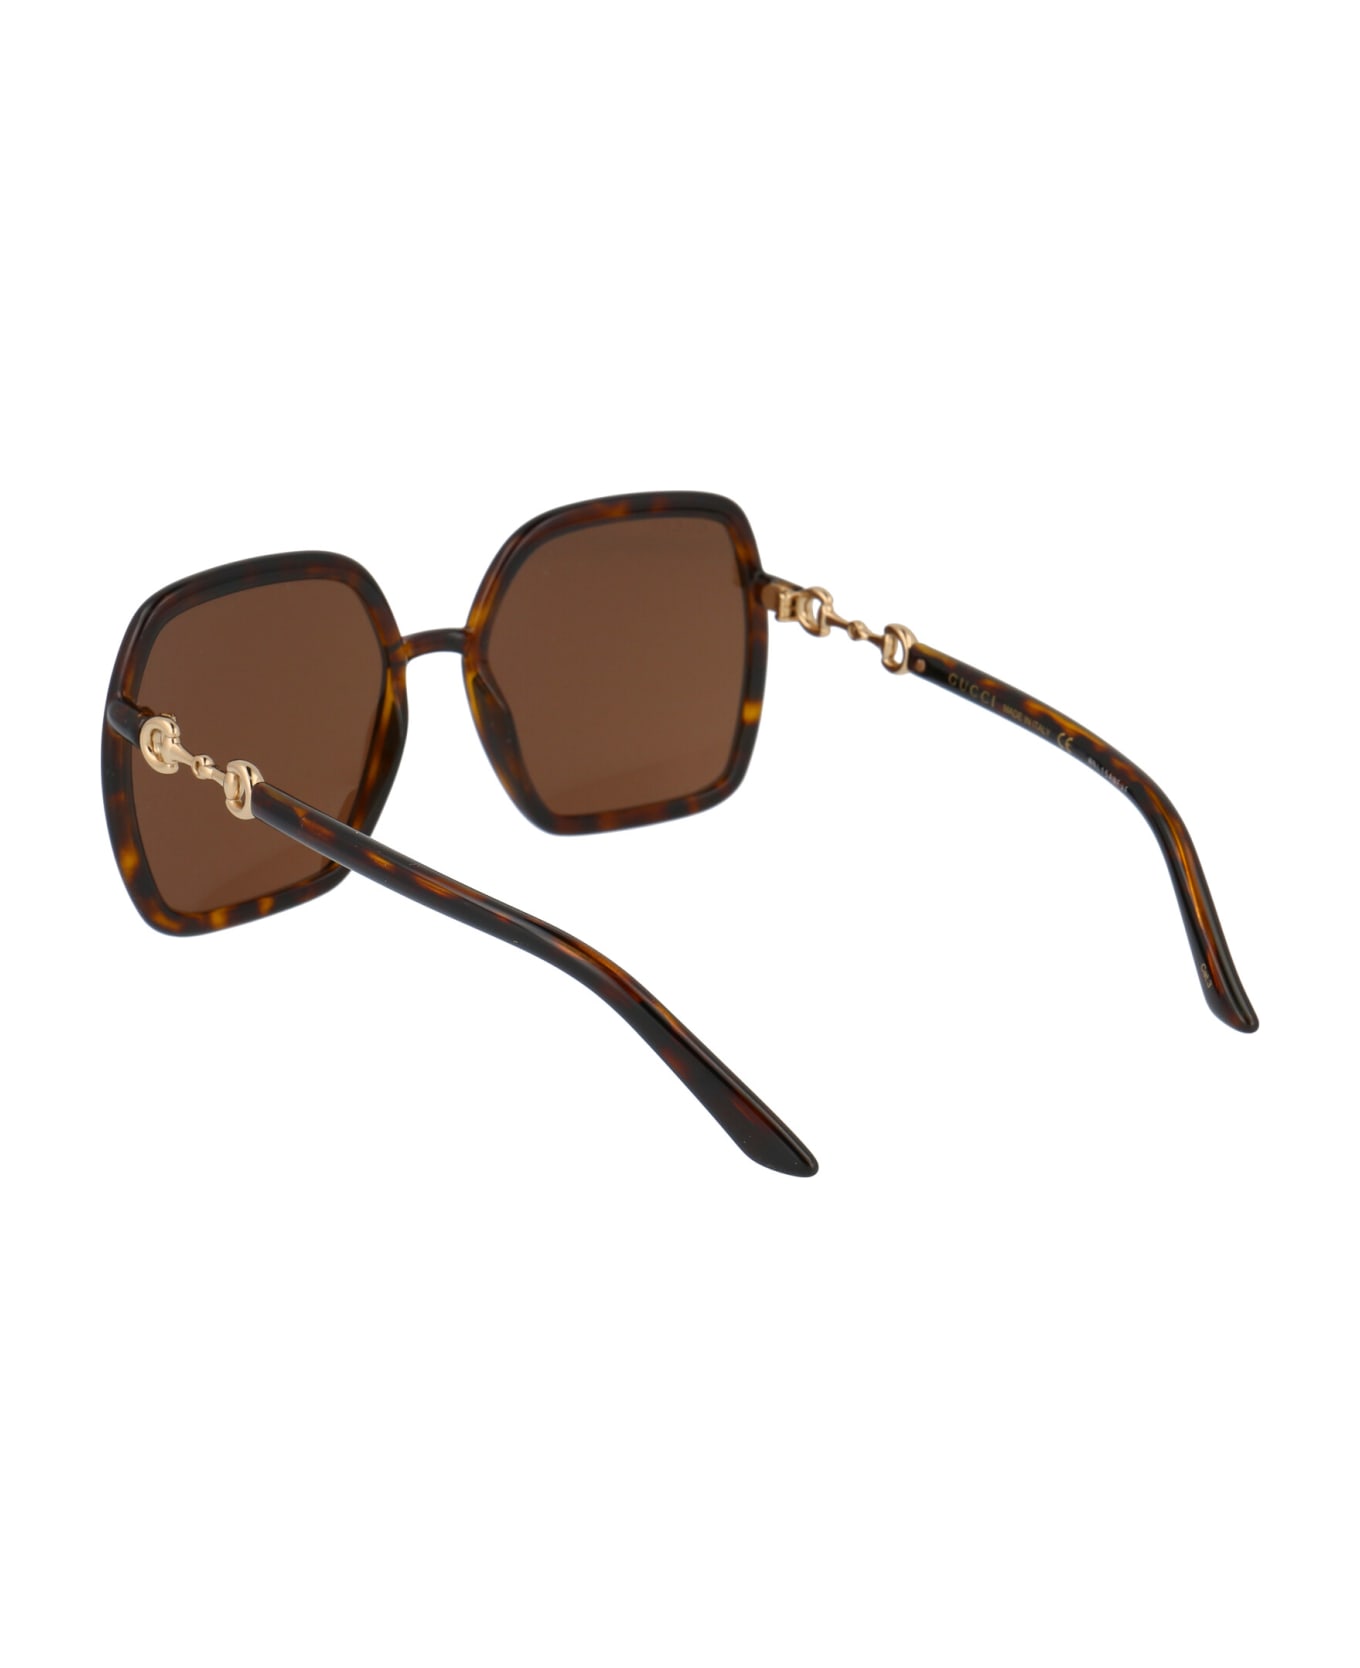 Gucci Eyewear Gg0890s Sunglasses - 002 HAVANA HAVANA BROWN